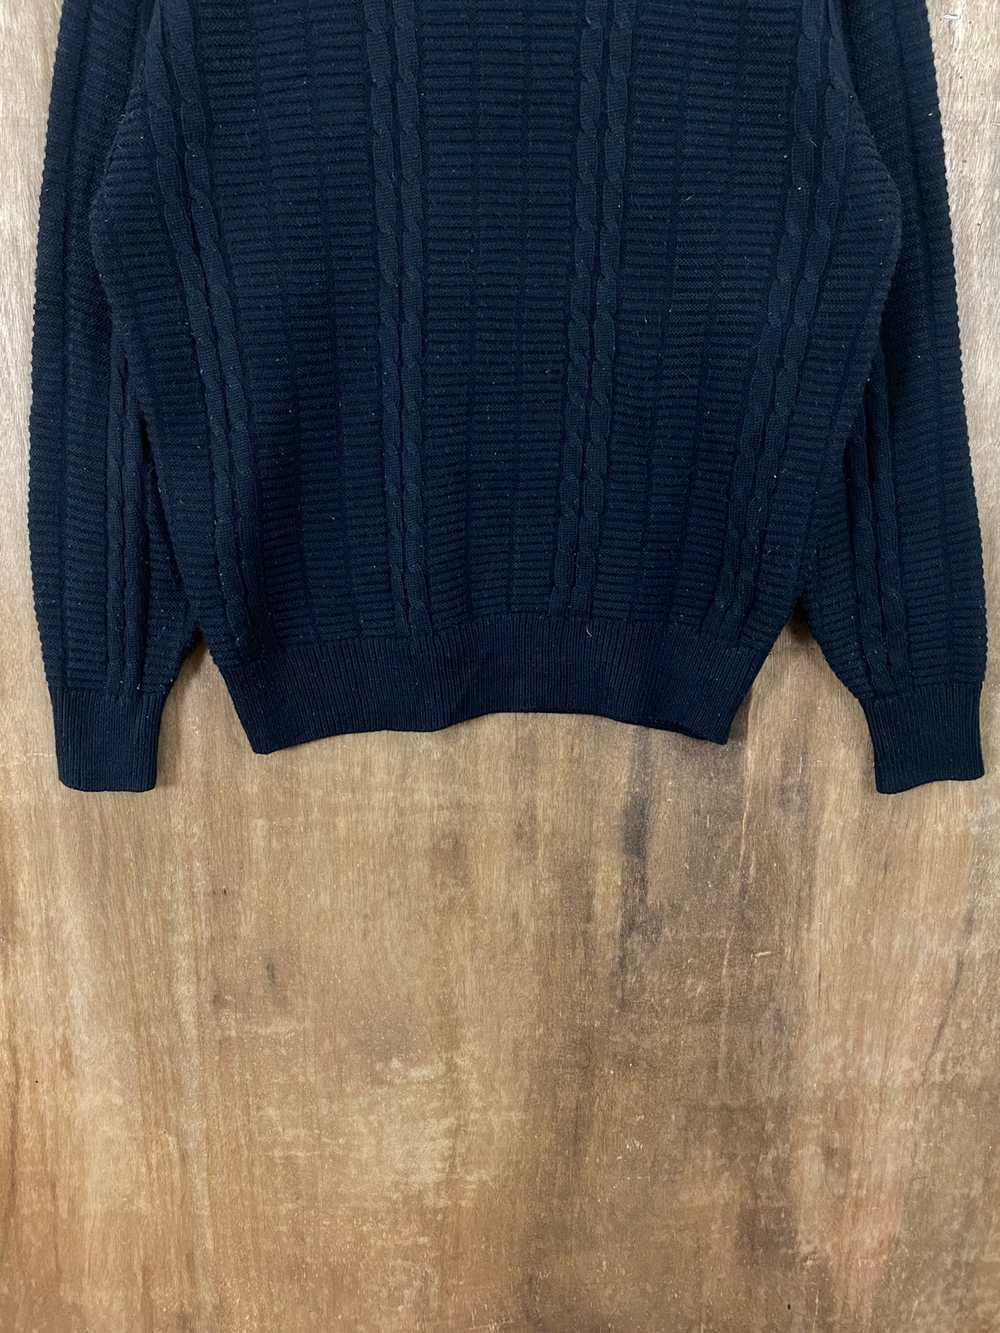 Japanese Brand - Japanese Brand Black Knit Sweate… - image 3